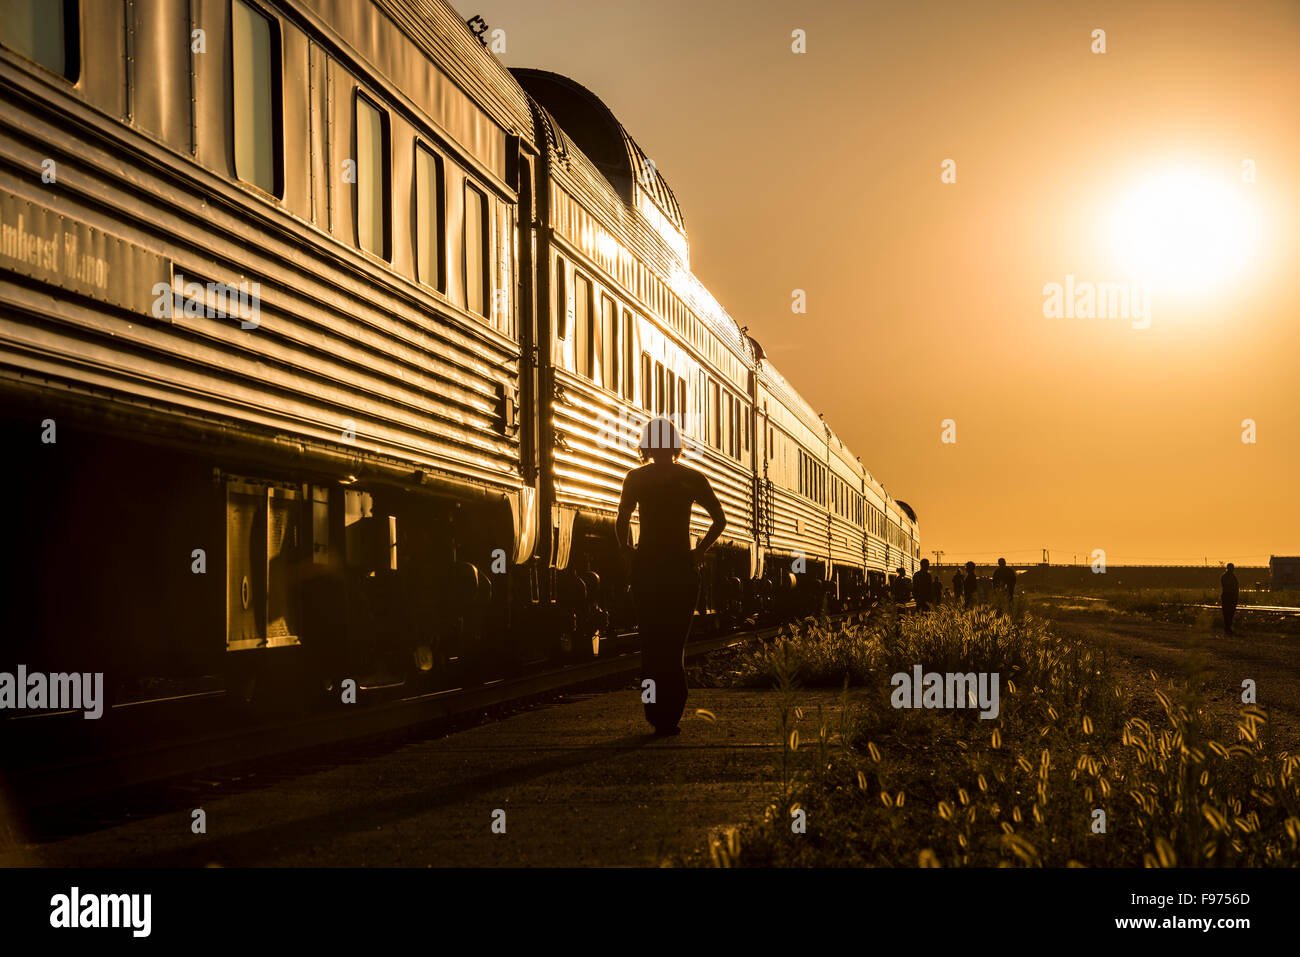 Passengers walking beside stopped passenger train at sunset. Stock Photo